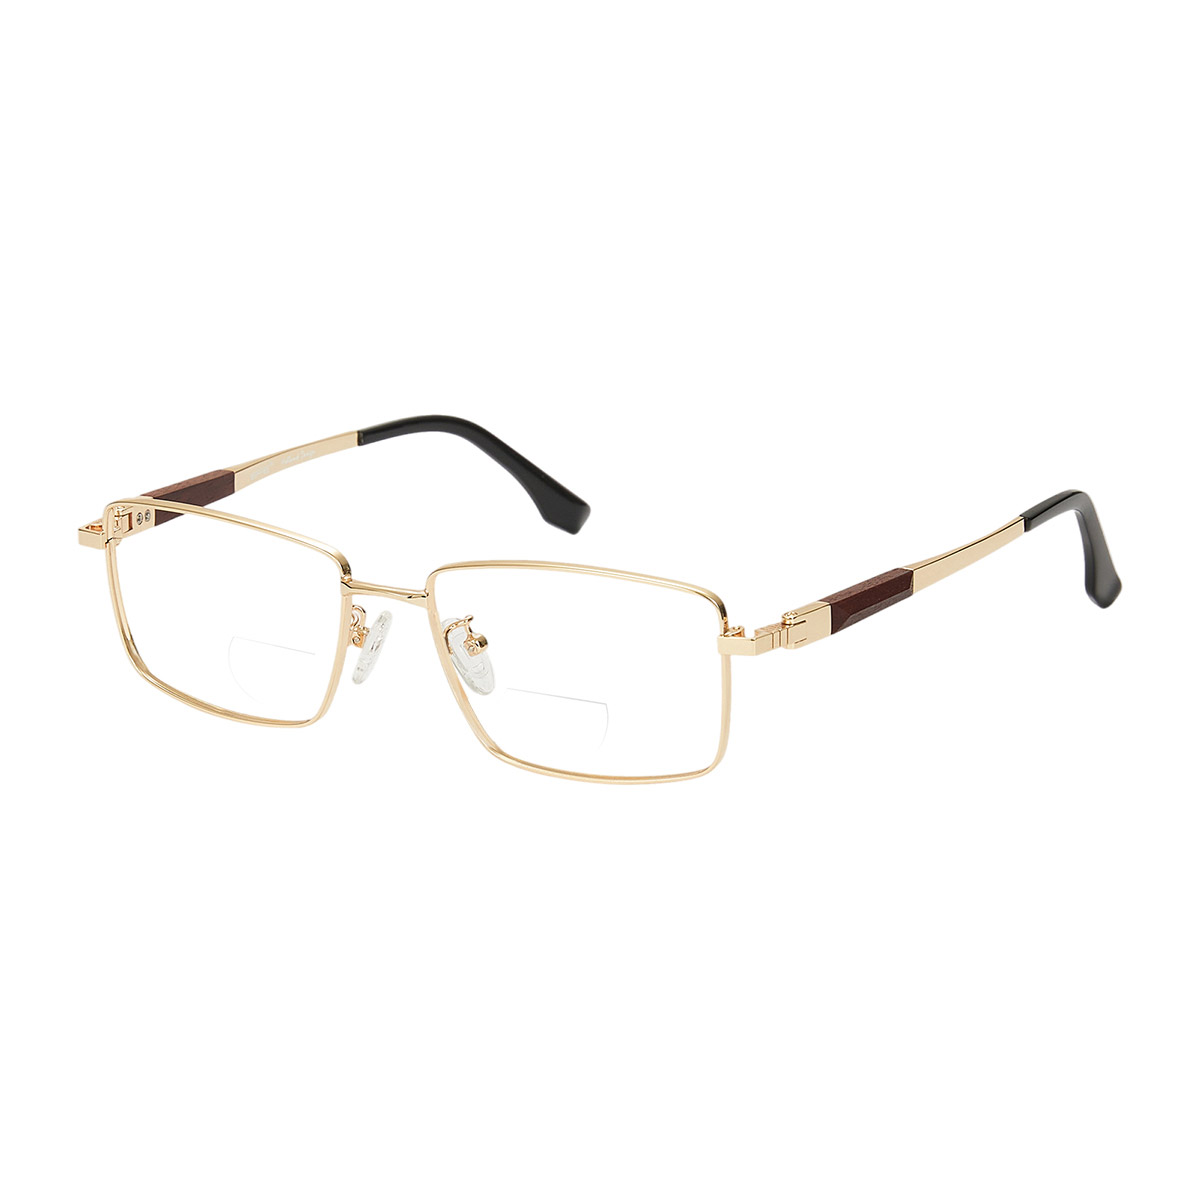 Amphion - Rectangle Gold Reading Glasses for Men